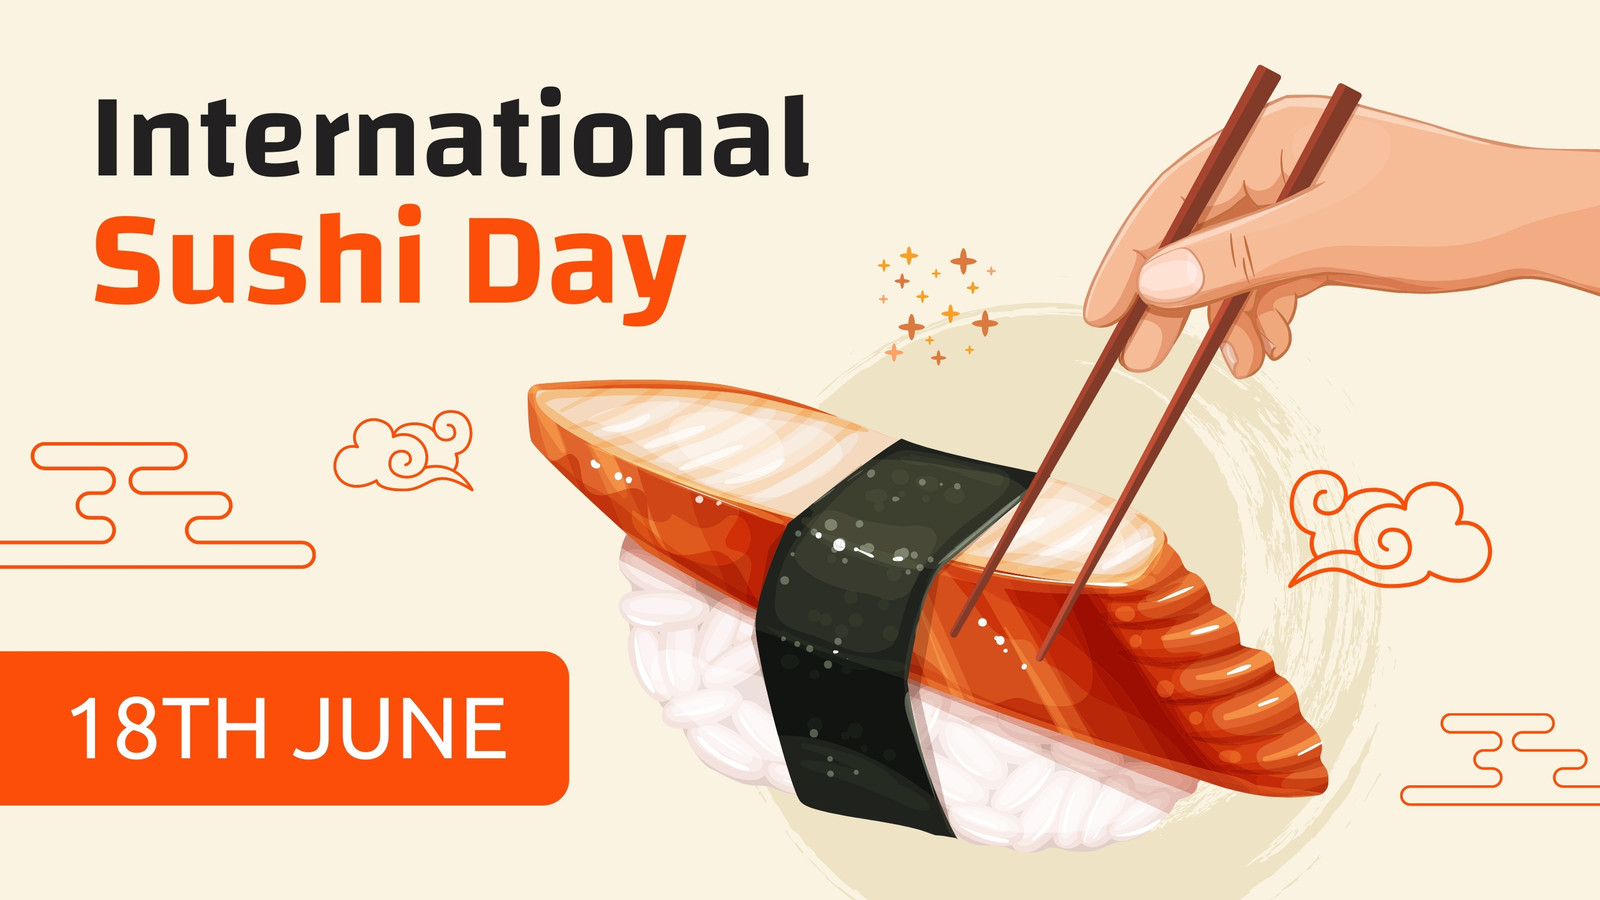 https://marketplace.canva.com/EAE-qyJO2HY/1/0/1600w/canva-orange-japanese-food-celebration-illustration-cartoon-happy-international-sushi-day-video-KwYh7g3BF2Q.jpg